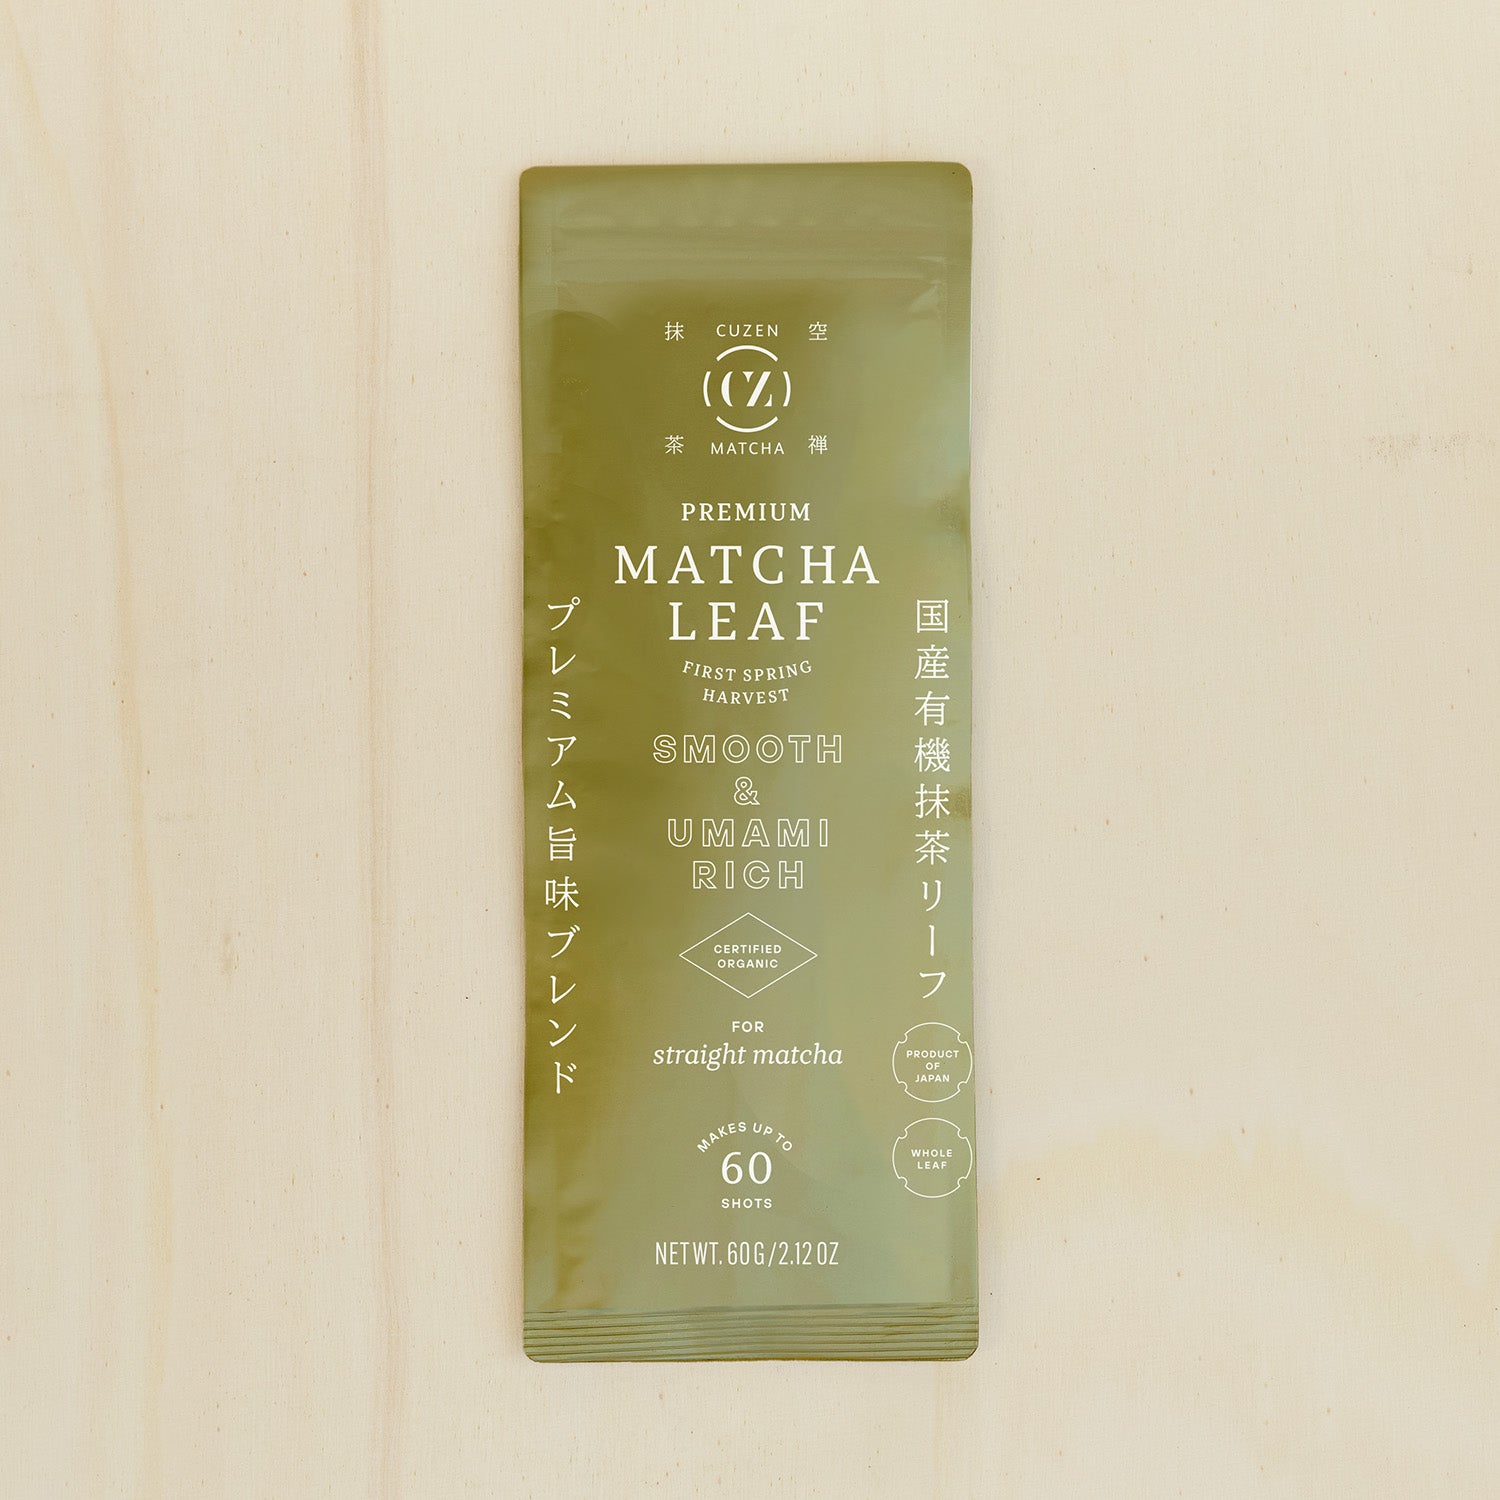 Comprar Kit té Matcha premium al mejor precio. Envíos 24/48h a España